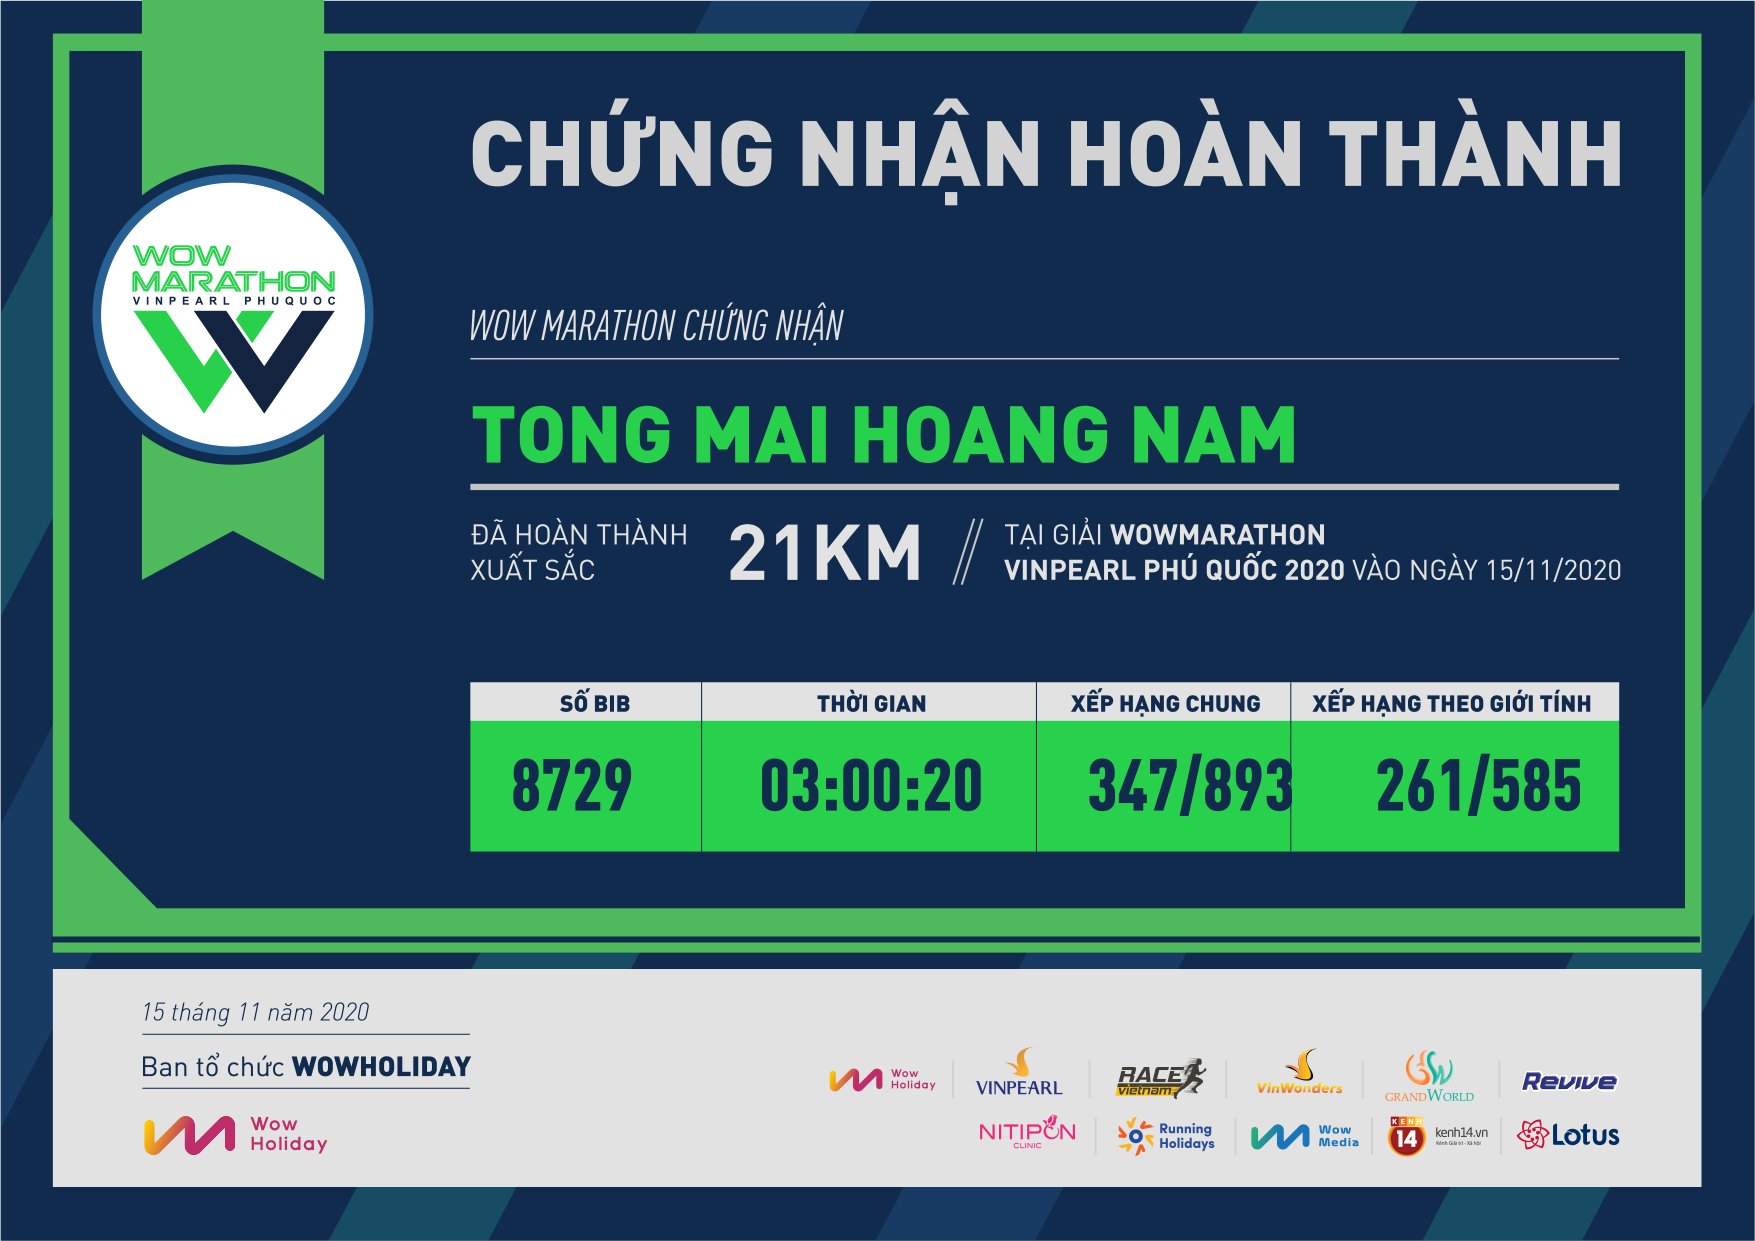 8729 - Tong Mai Hoang Nam